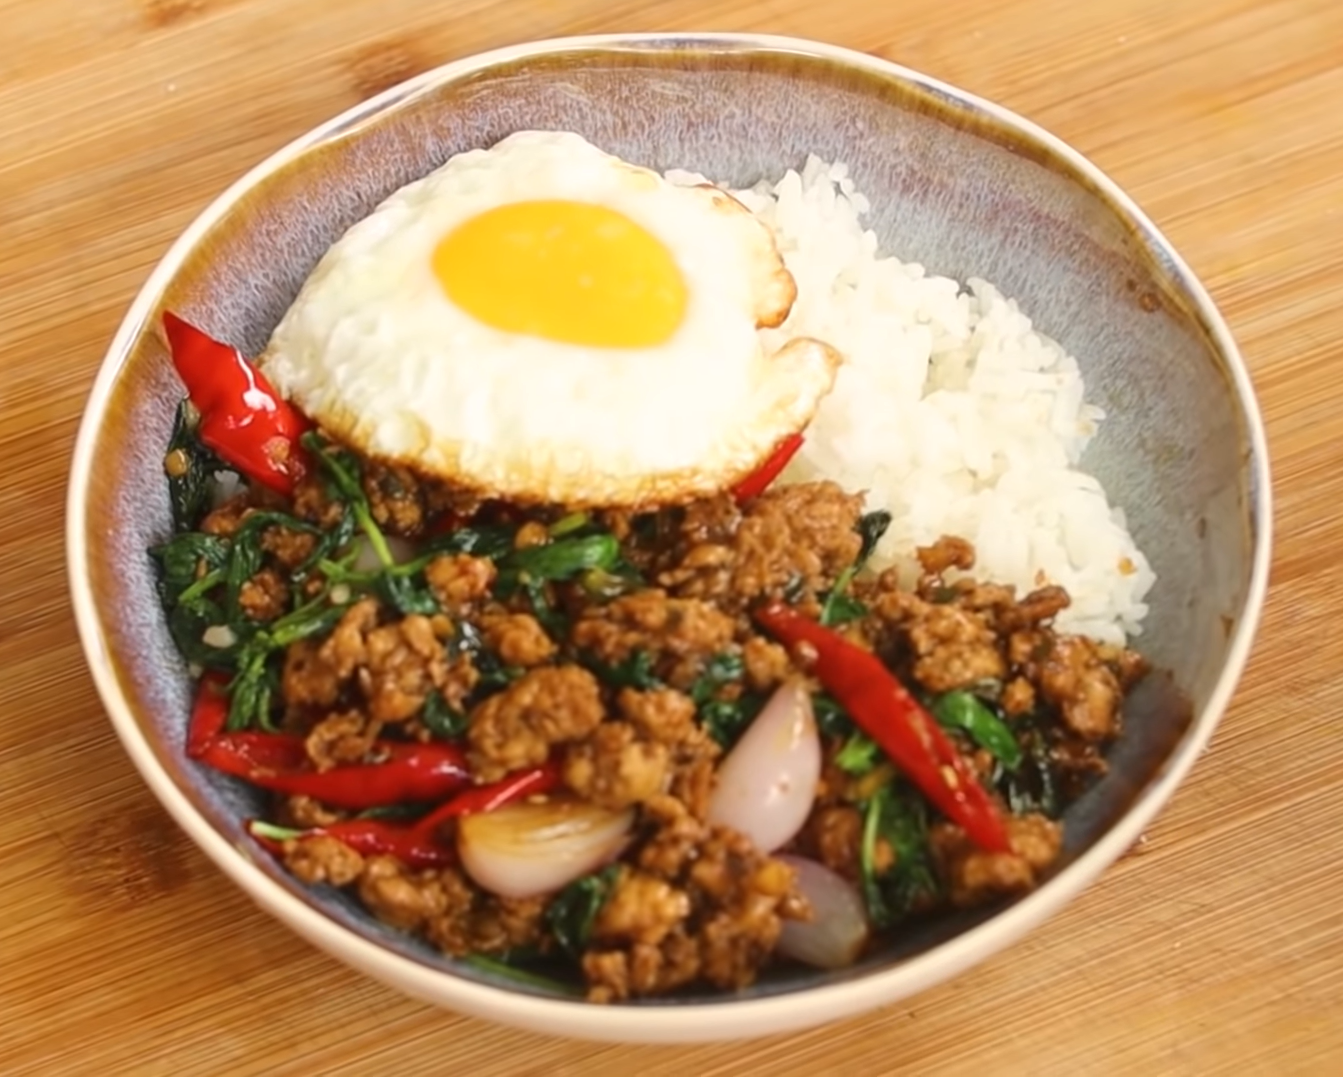 7 Menit Jadi! Resep Ayam Kemangi Pad Kra Pao Khas Thailand, Simpel dan Praktis